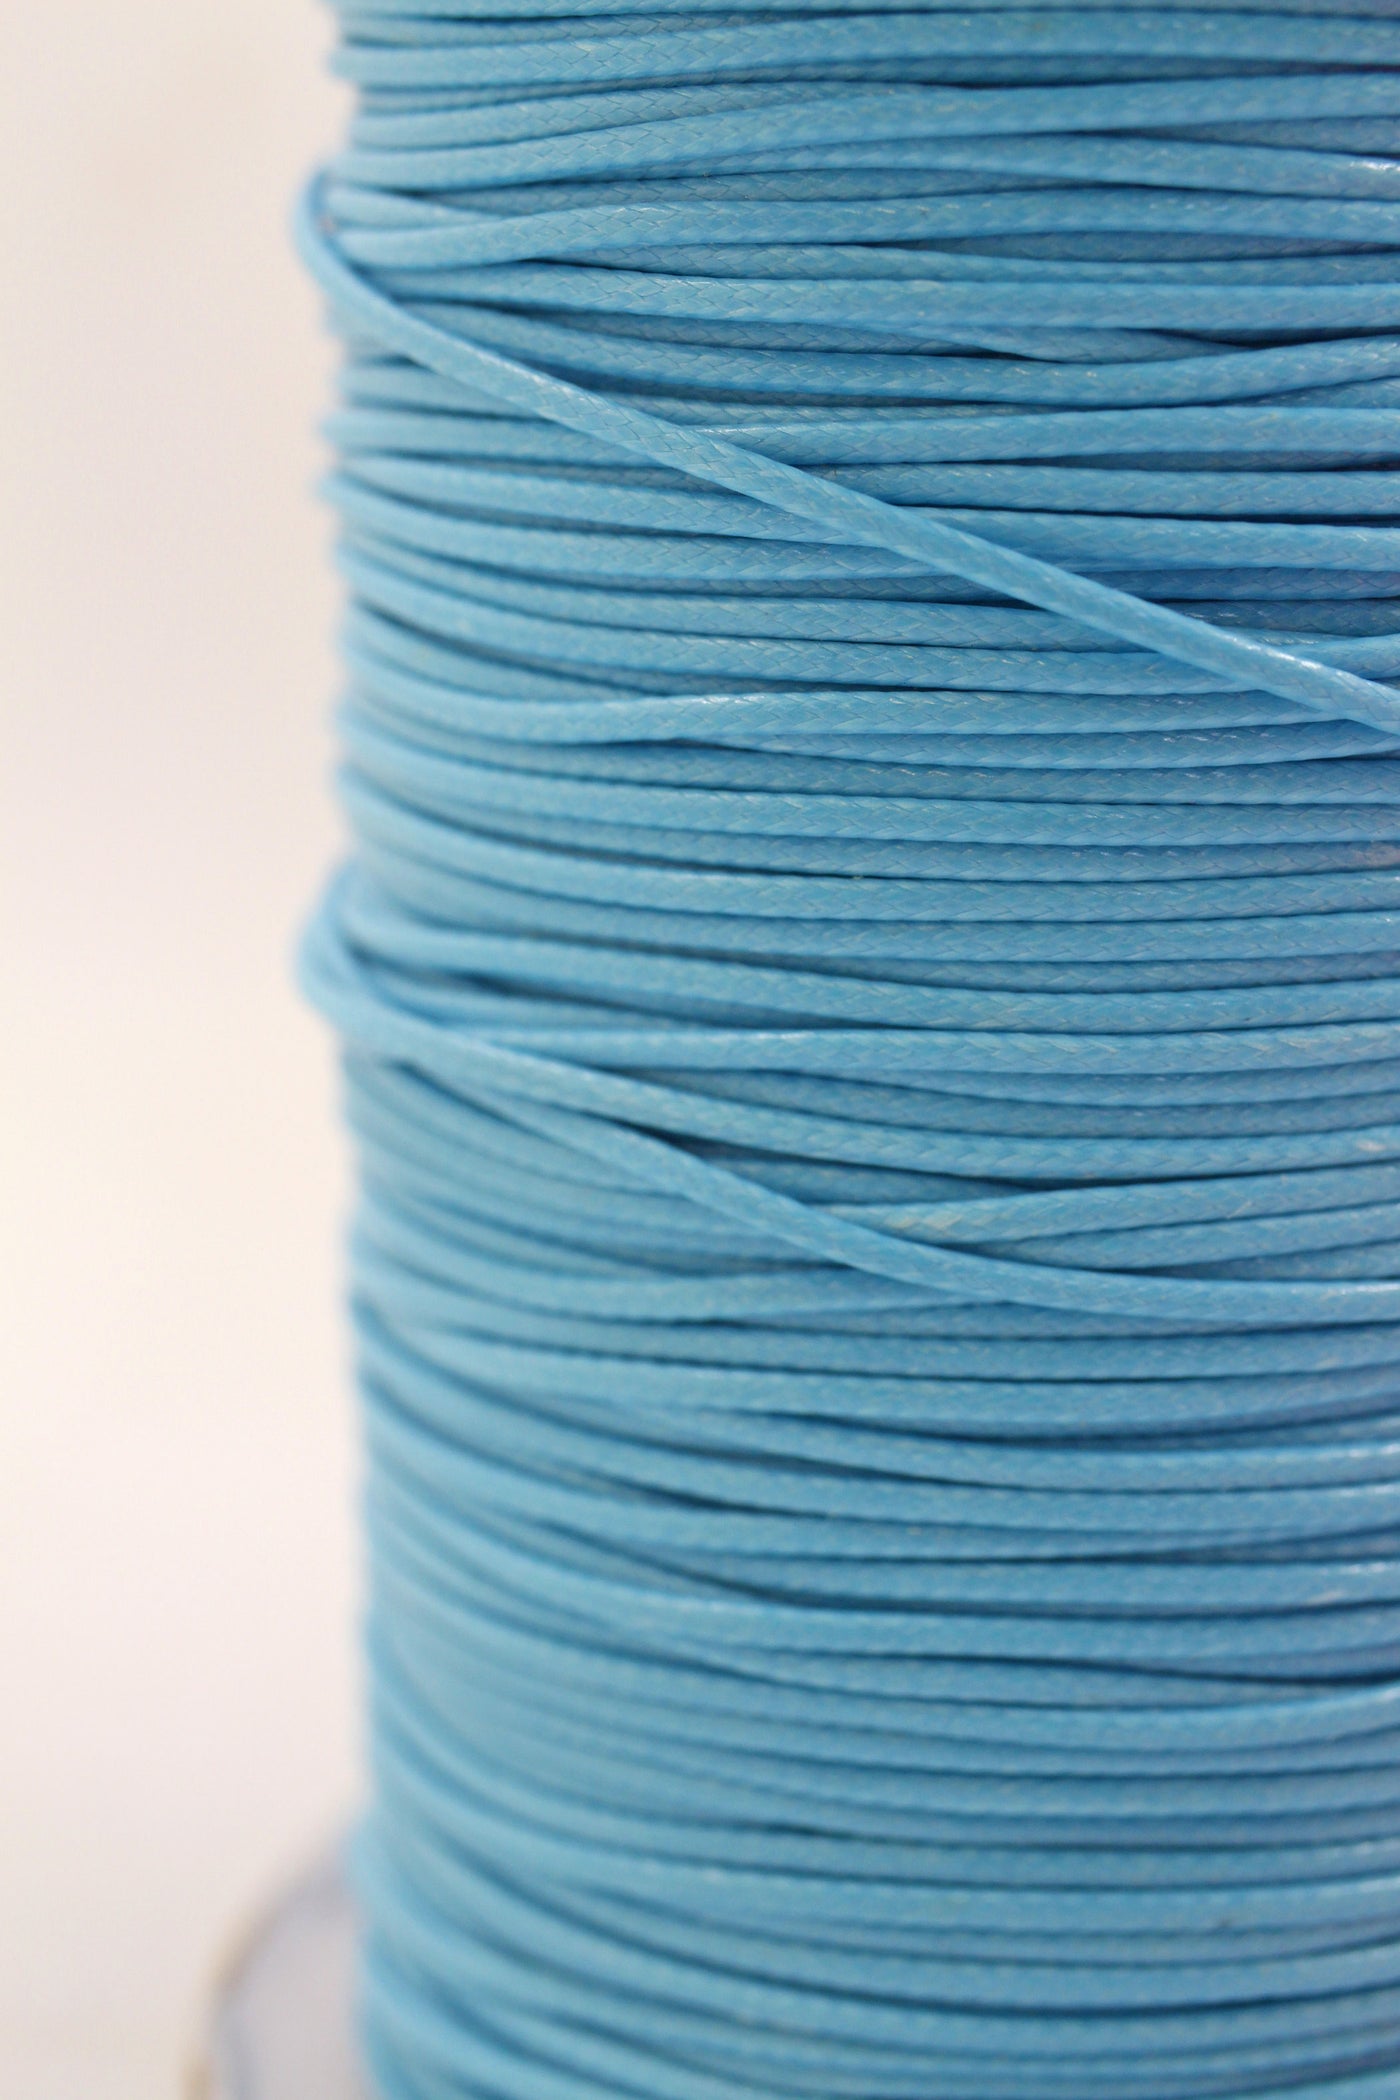 Buy Macrame Nylon Cord 1mm, Nylon Thread, Choose Your Color